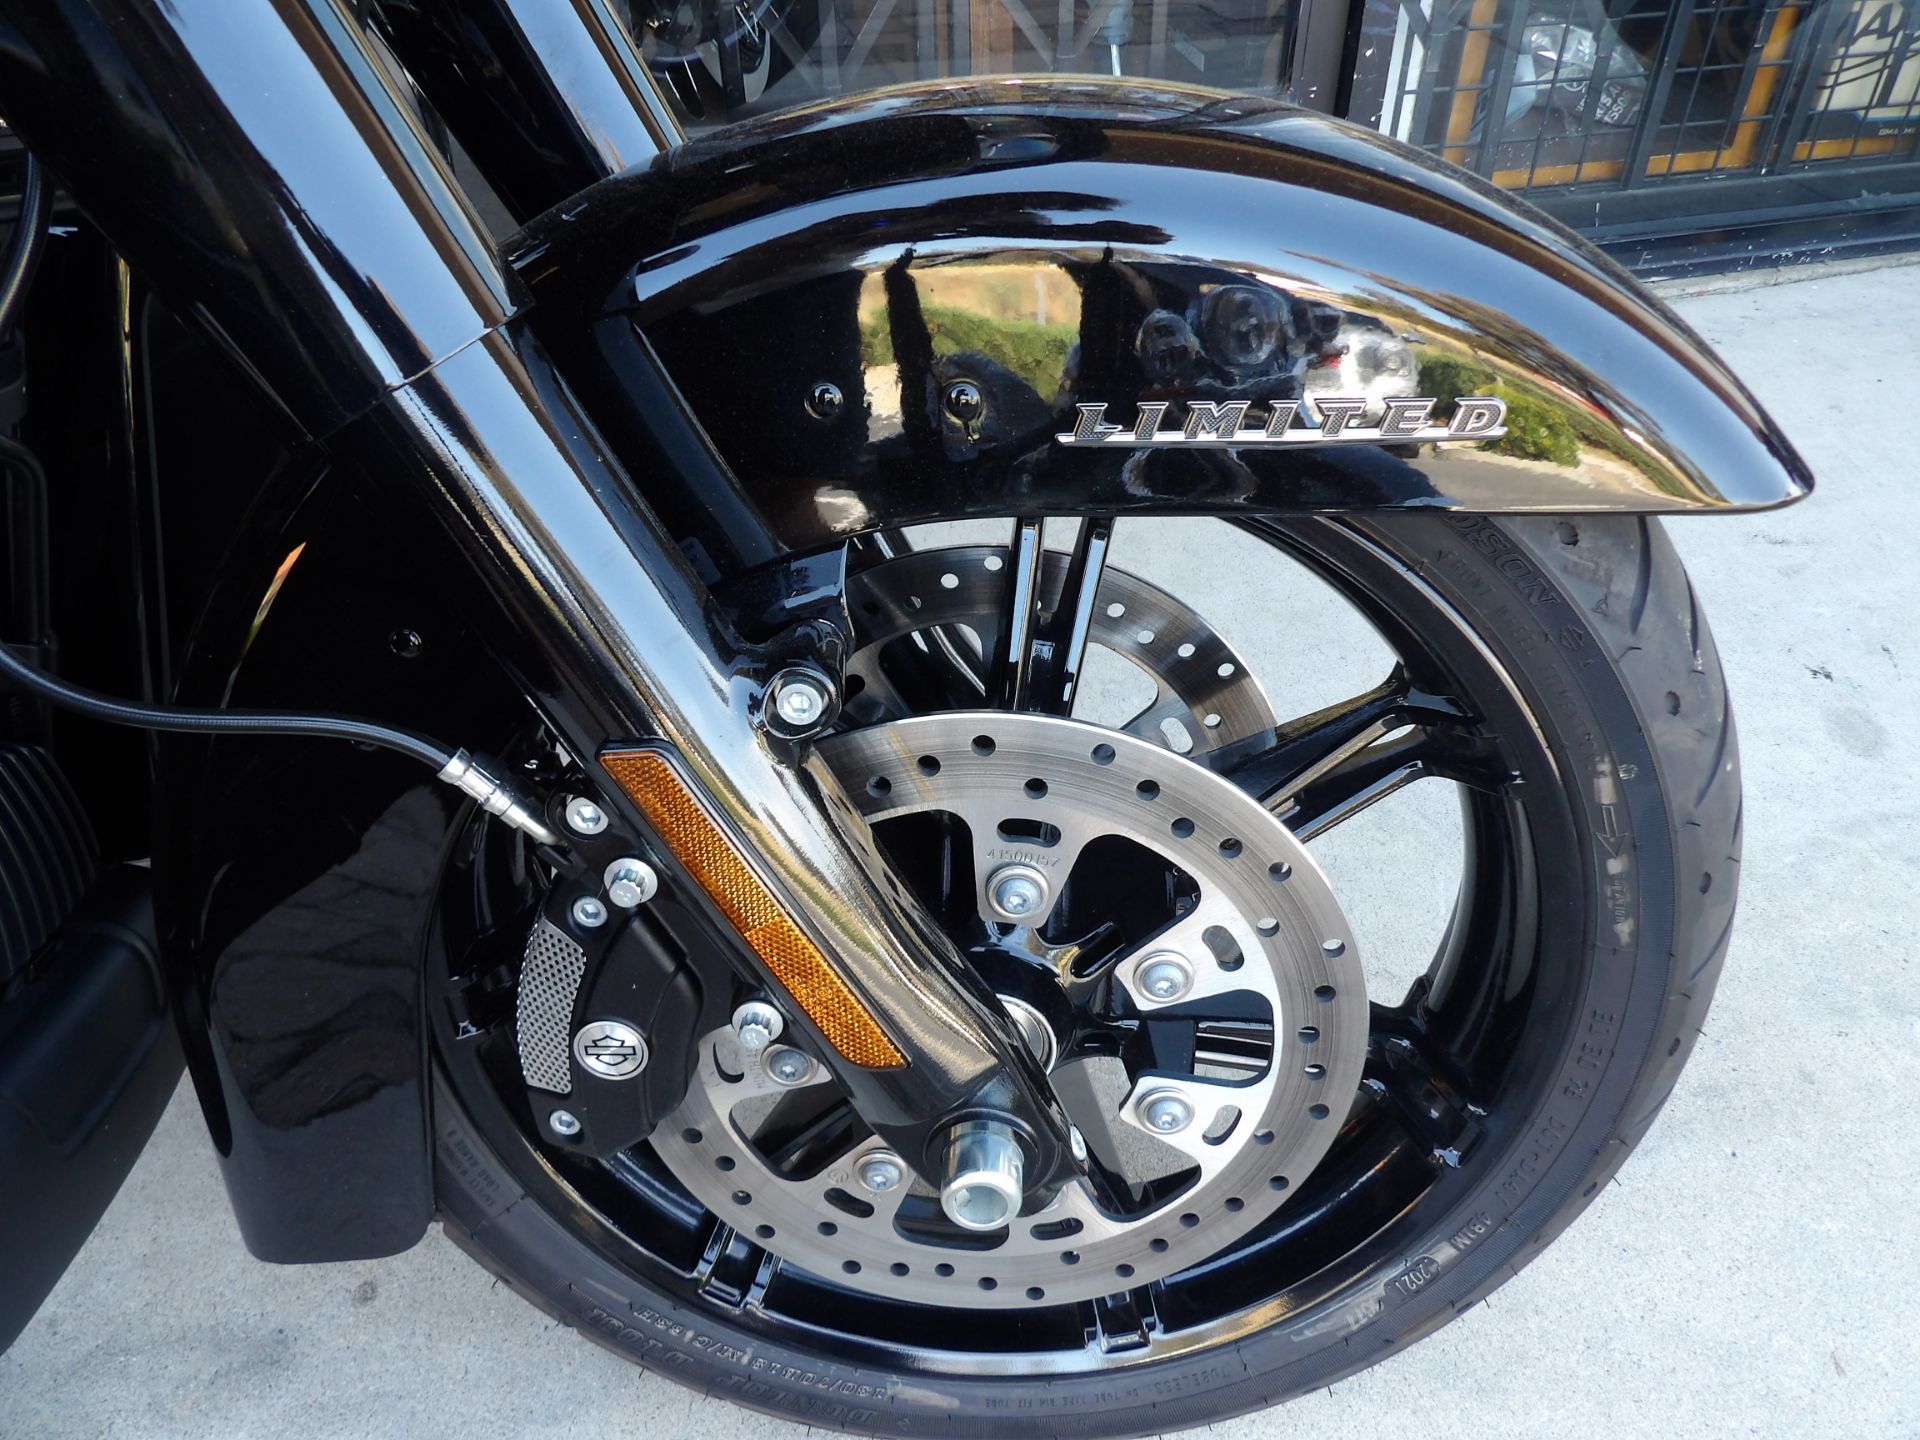 2021 Harley-Davidson Road Glide® Limited in Temecula, California - Photo 22